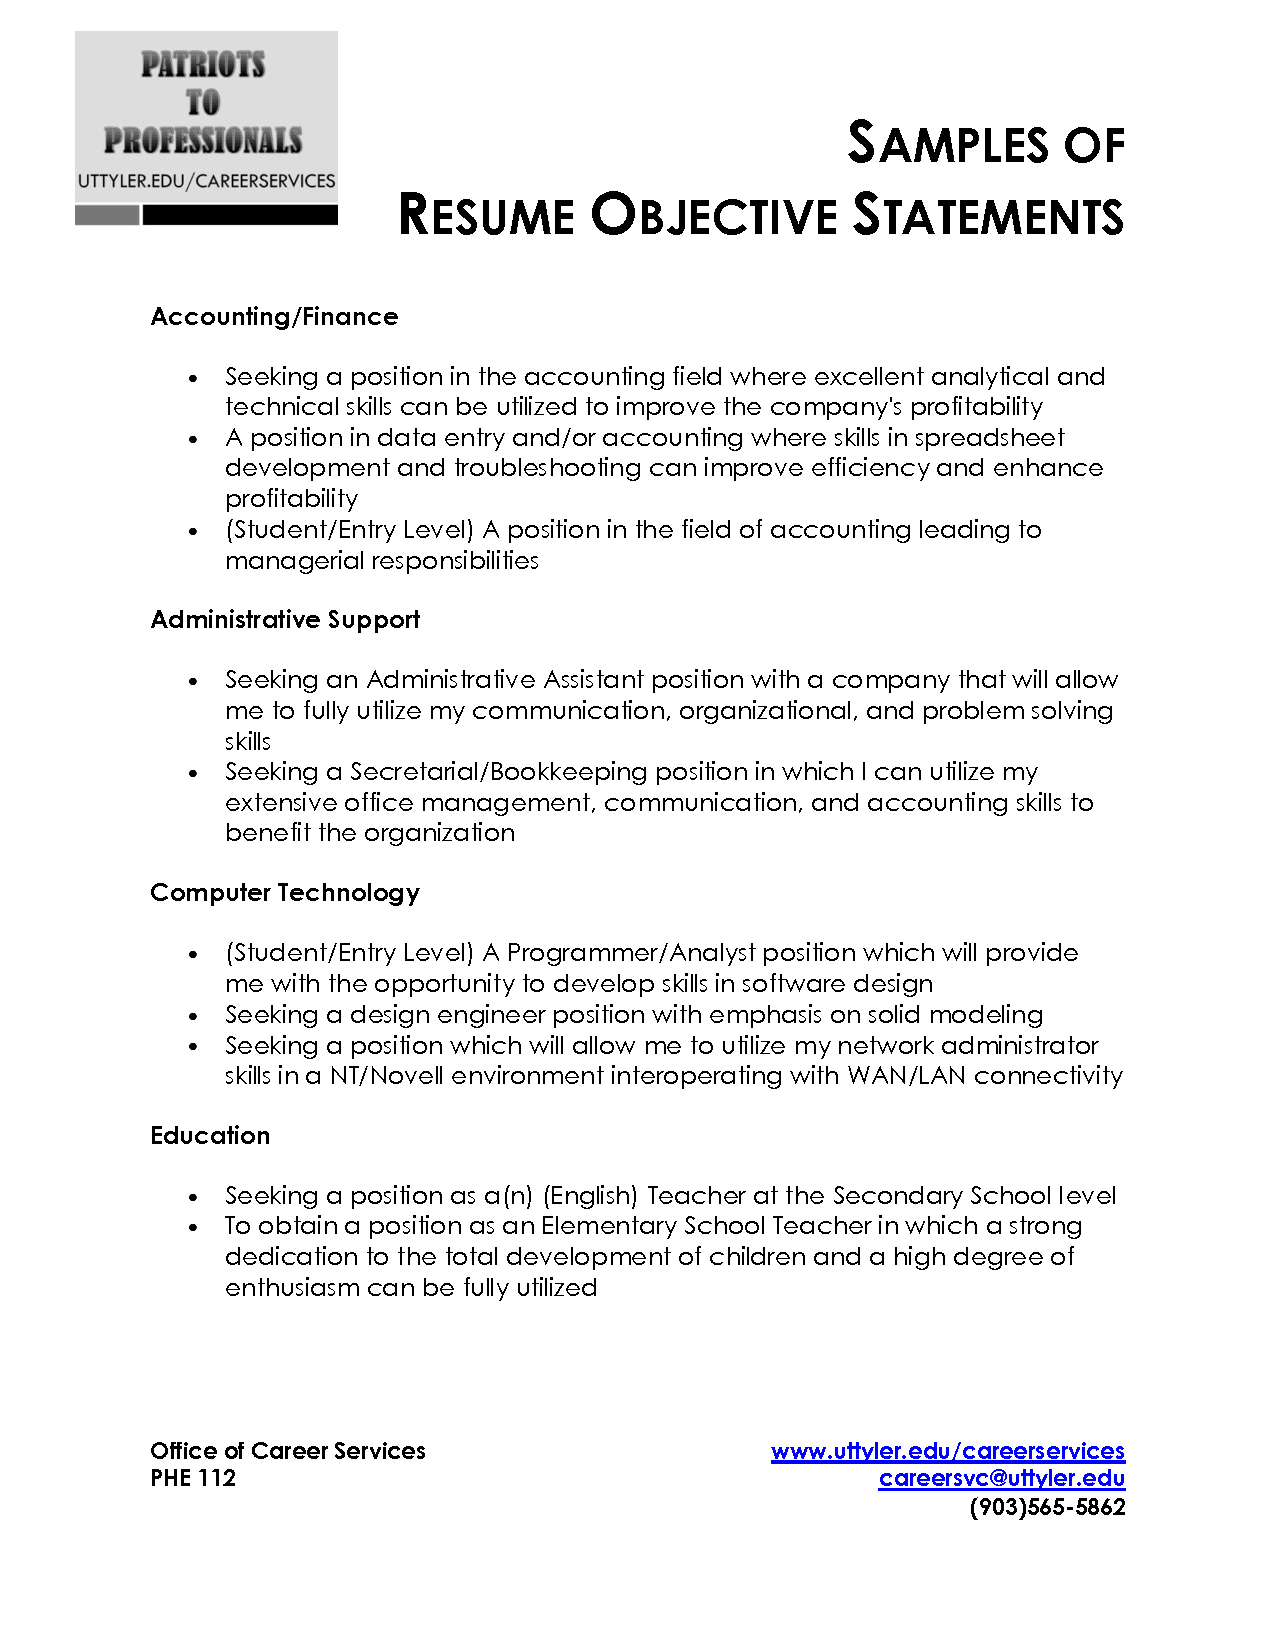 Resume Objective Statement